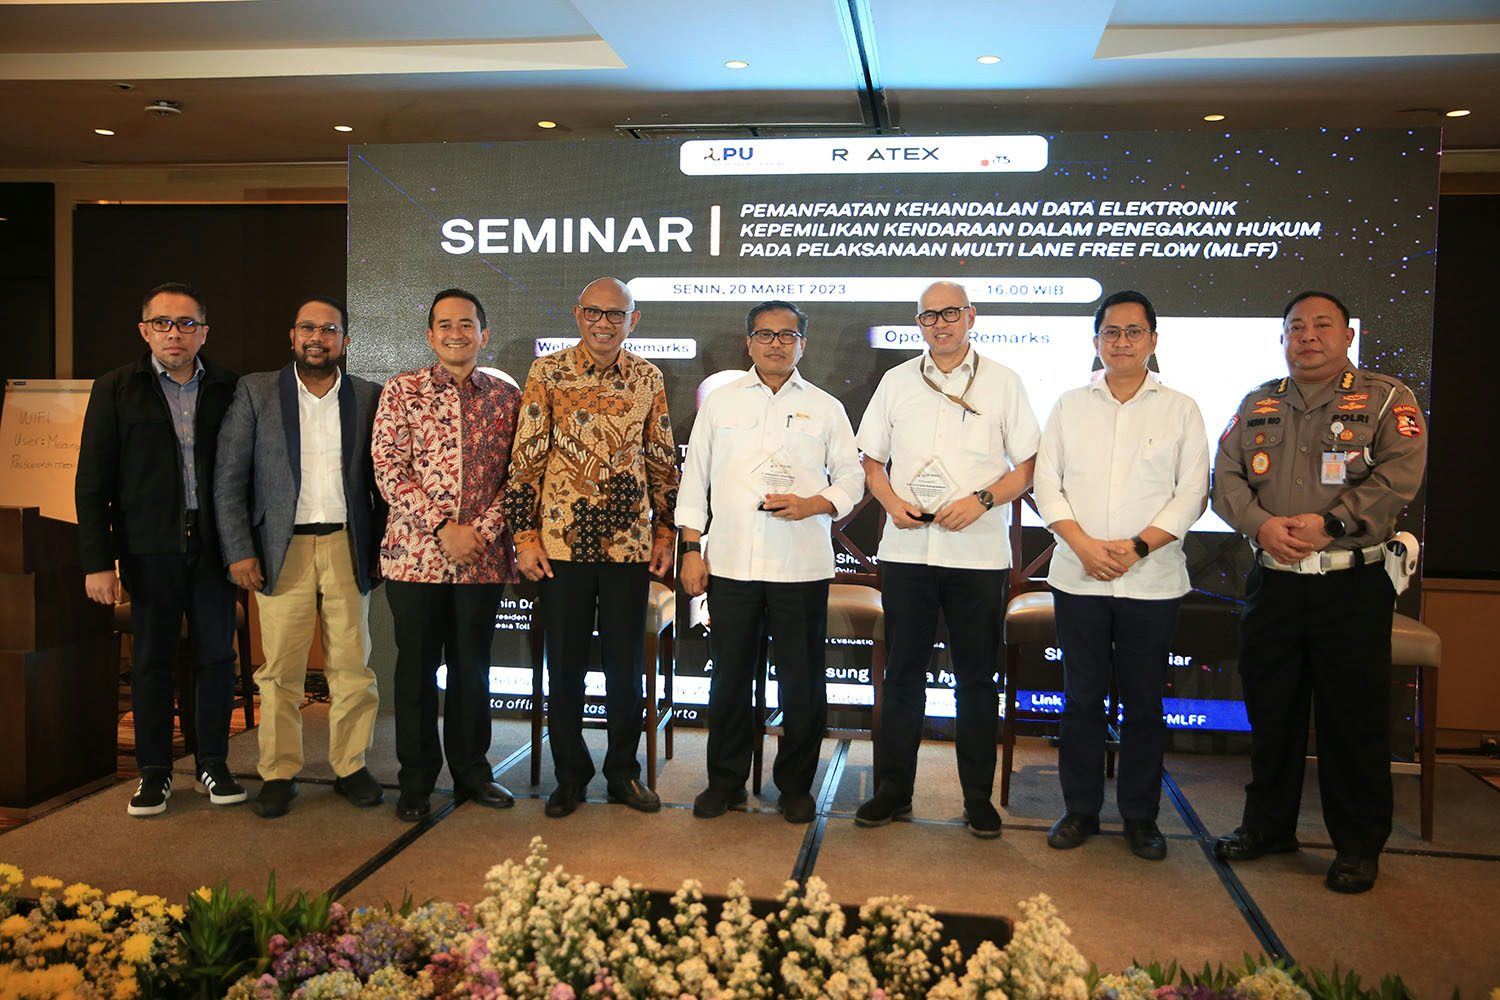 Socialization of Multi Lane Free Flow Technology in Indonesia